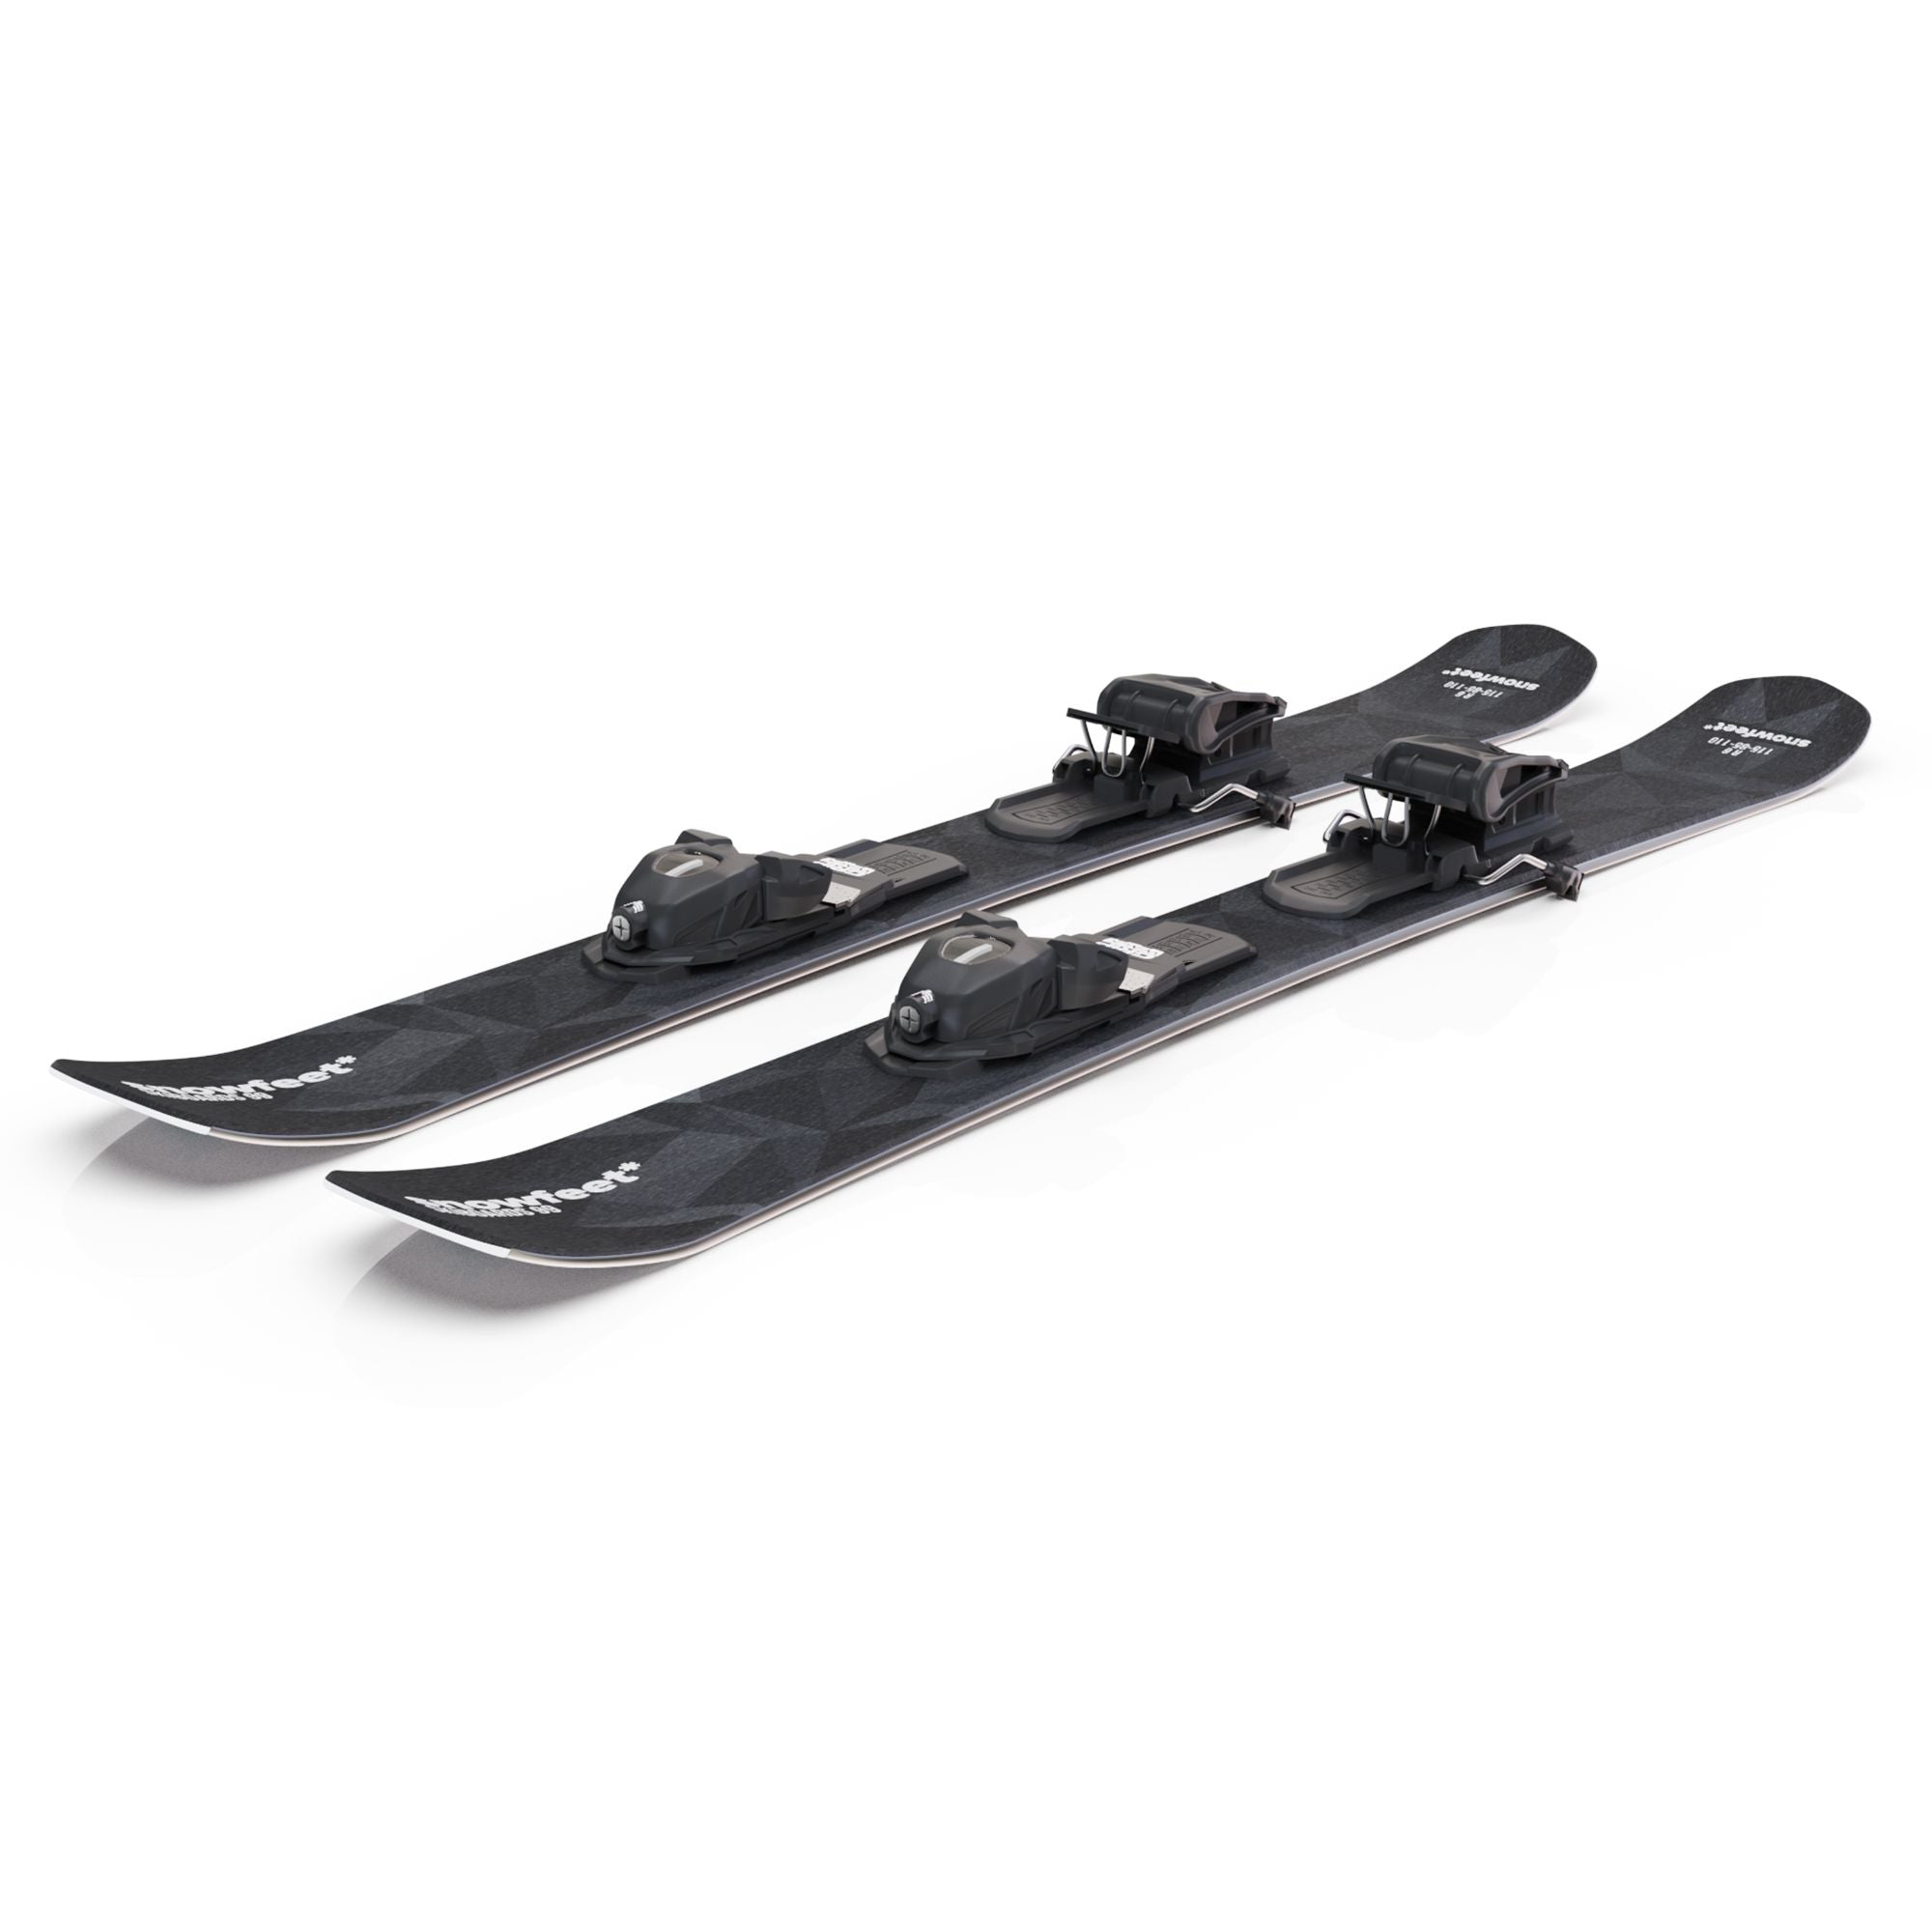 skiboards snowblades short ski 99 snowfeet mini little ski skiblades with profi ski releasable bindings black